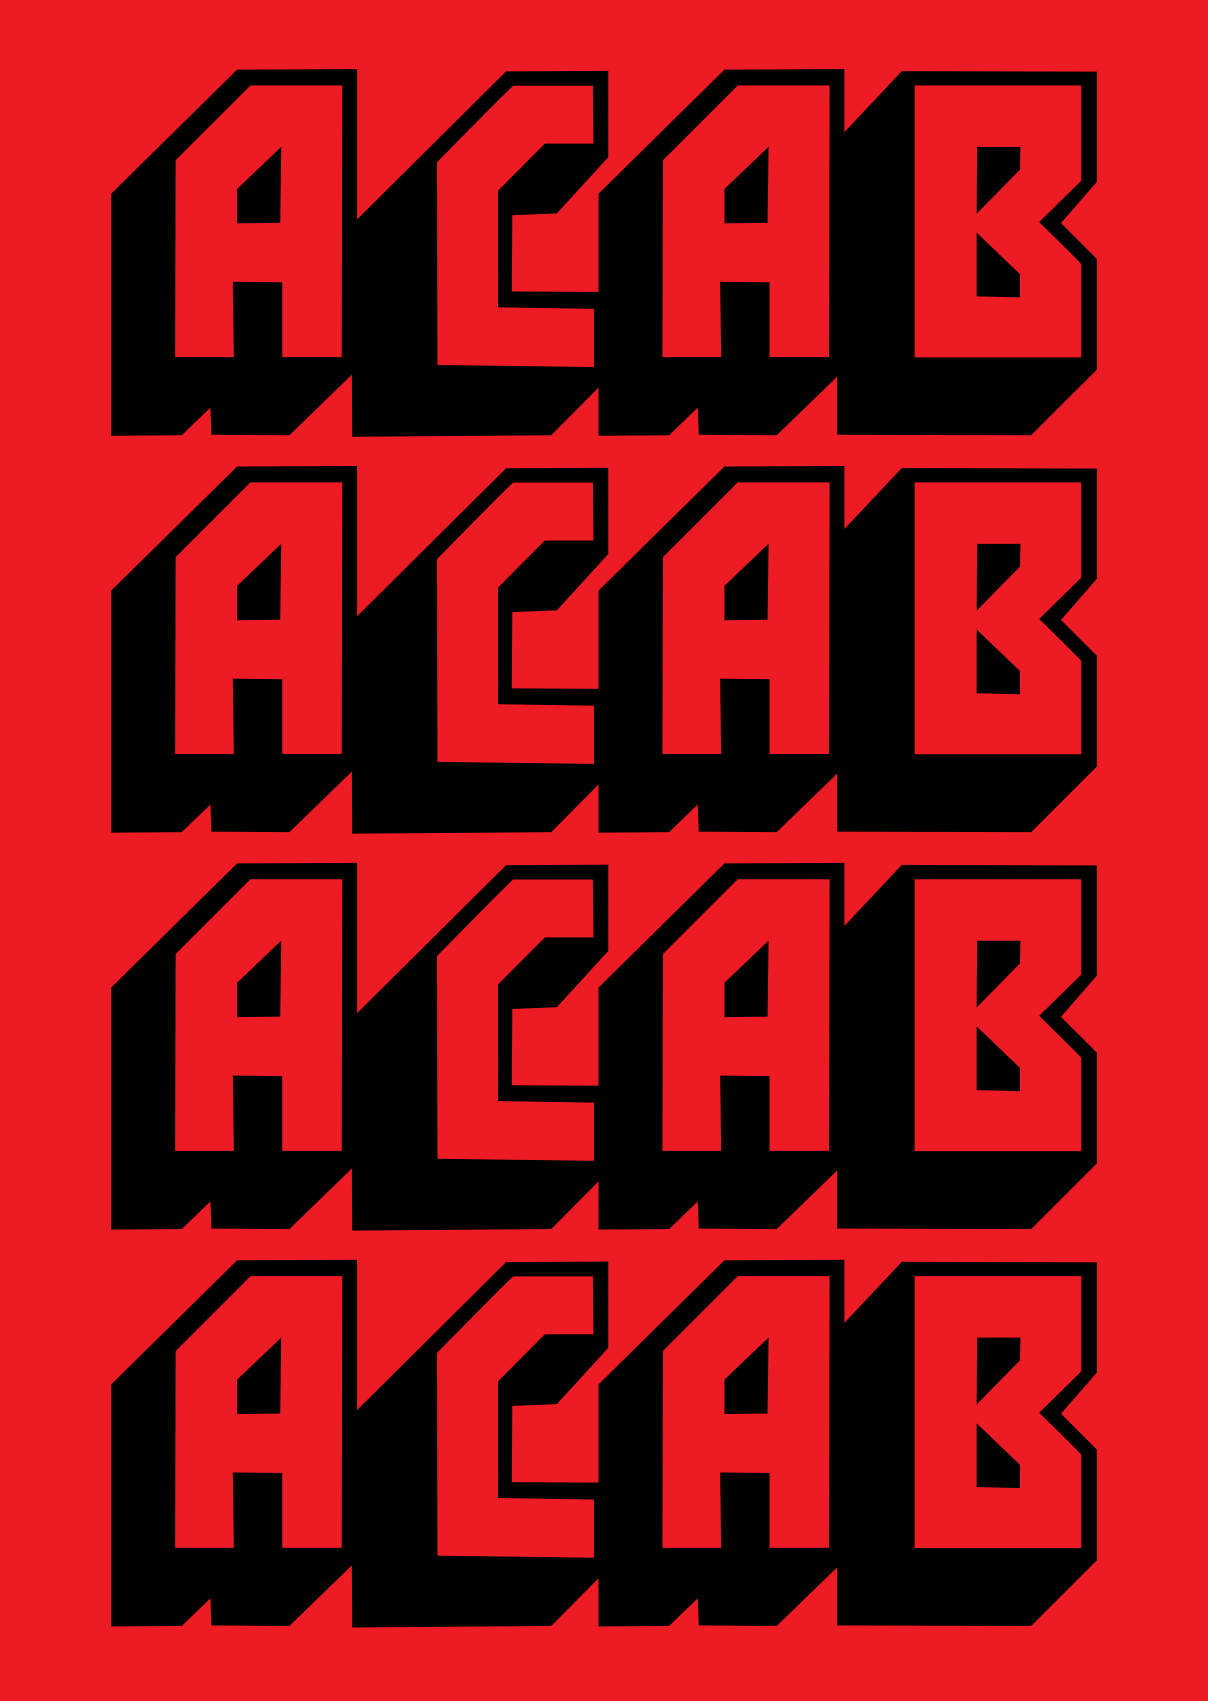 ACAB poster